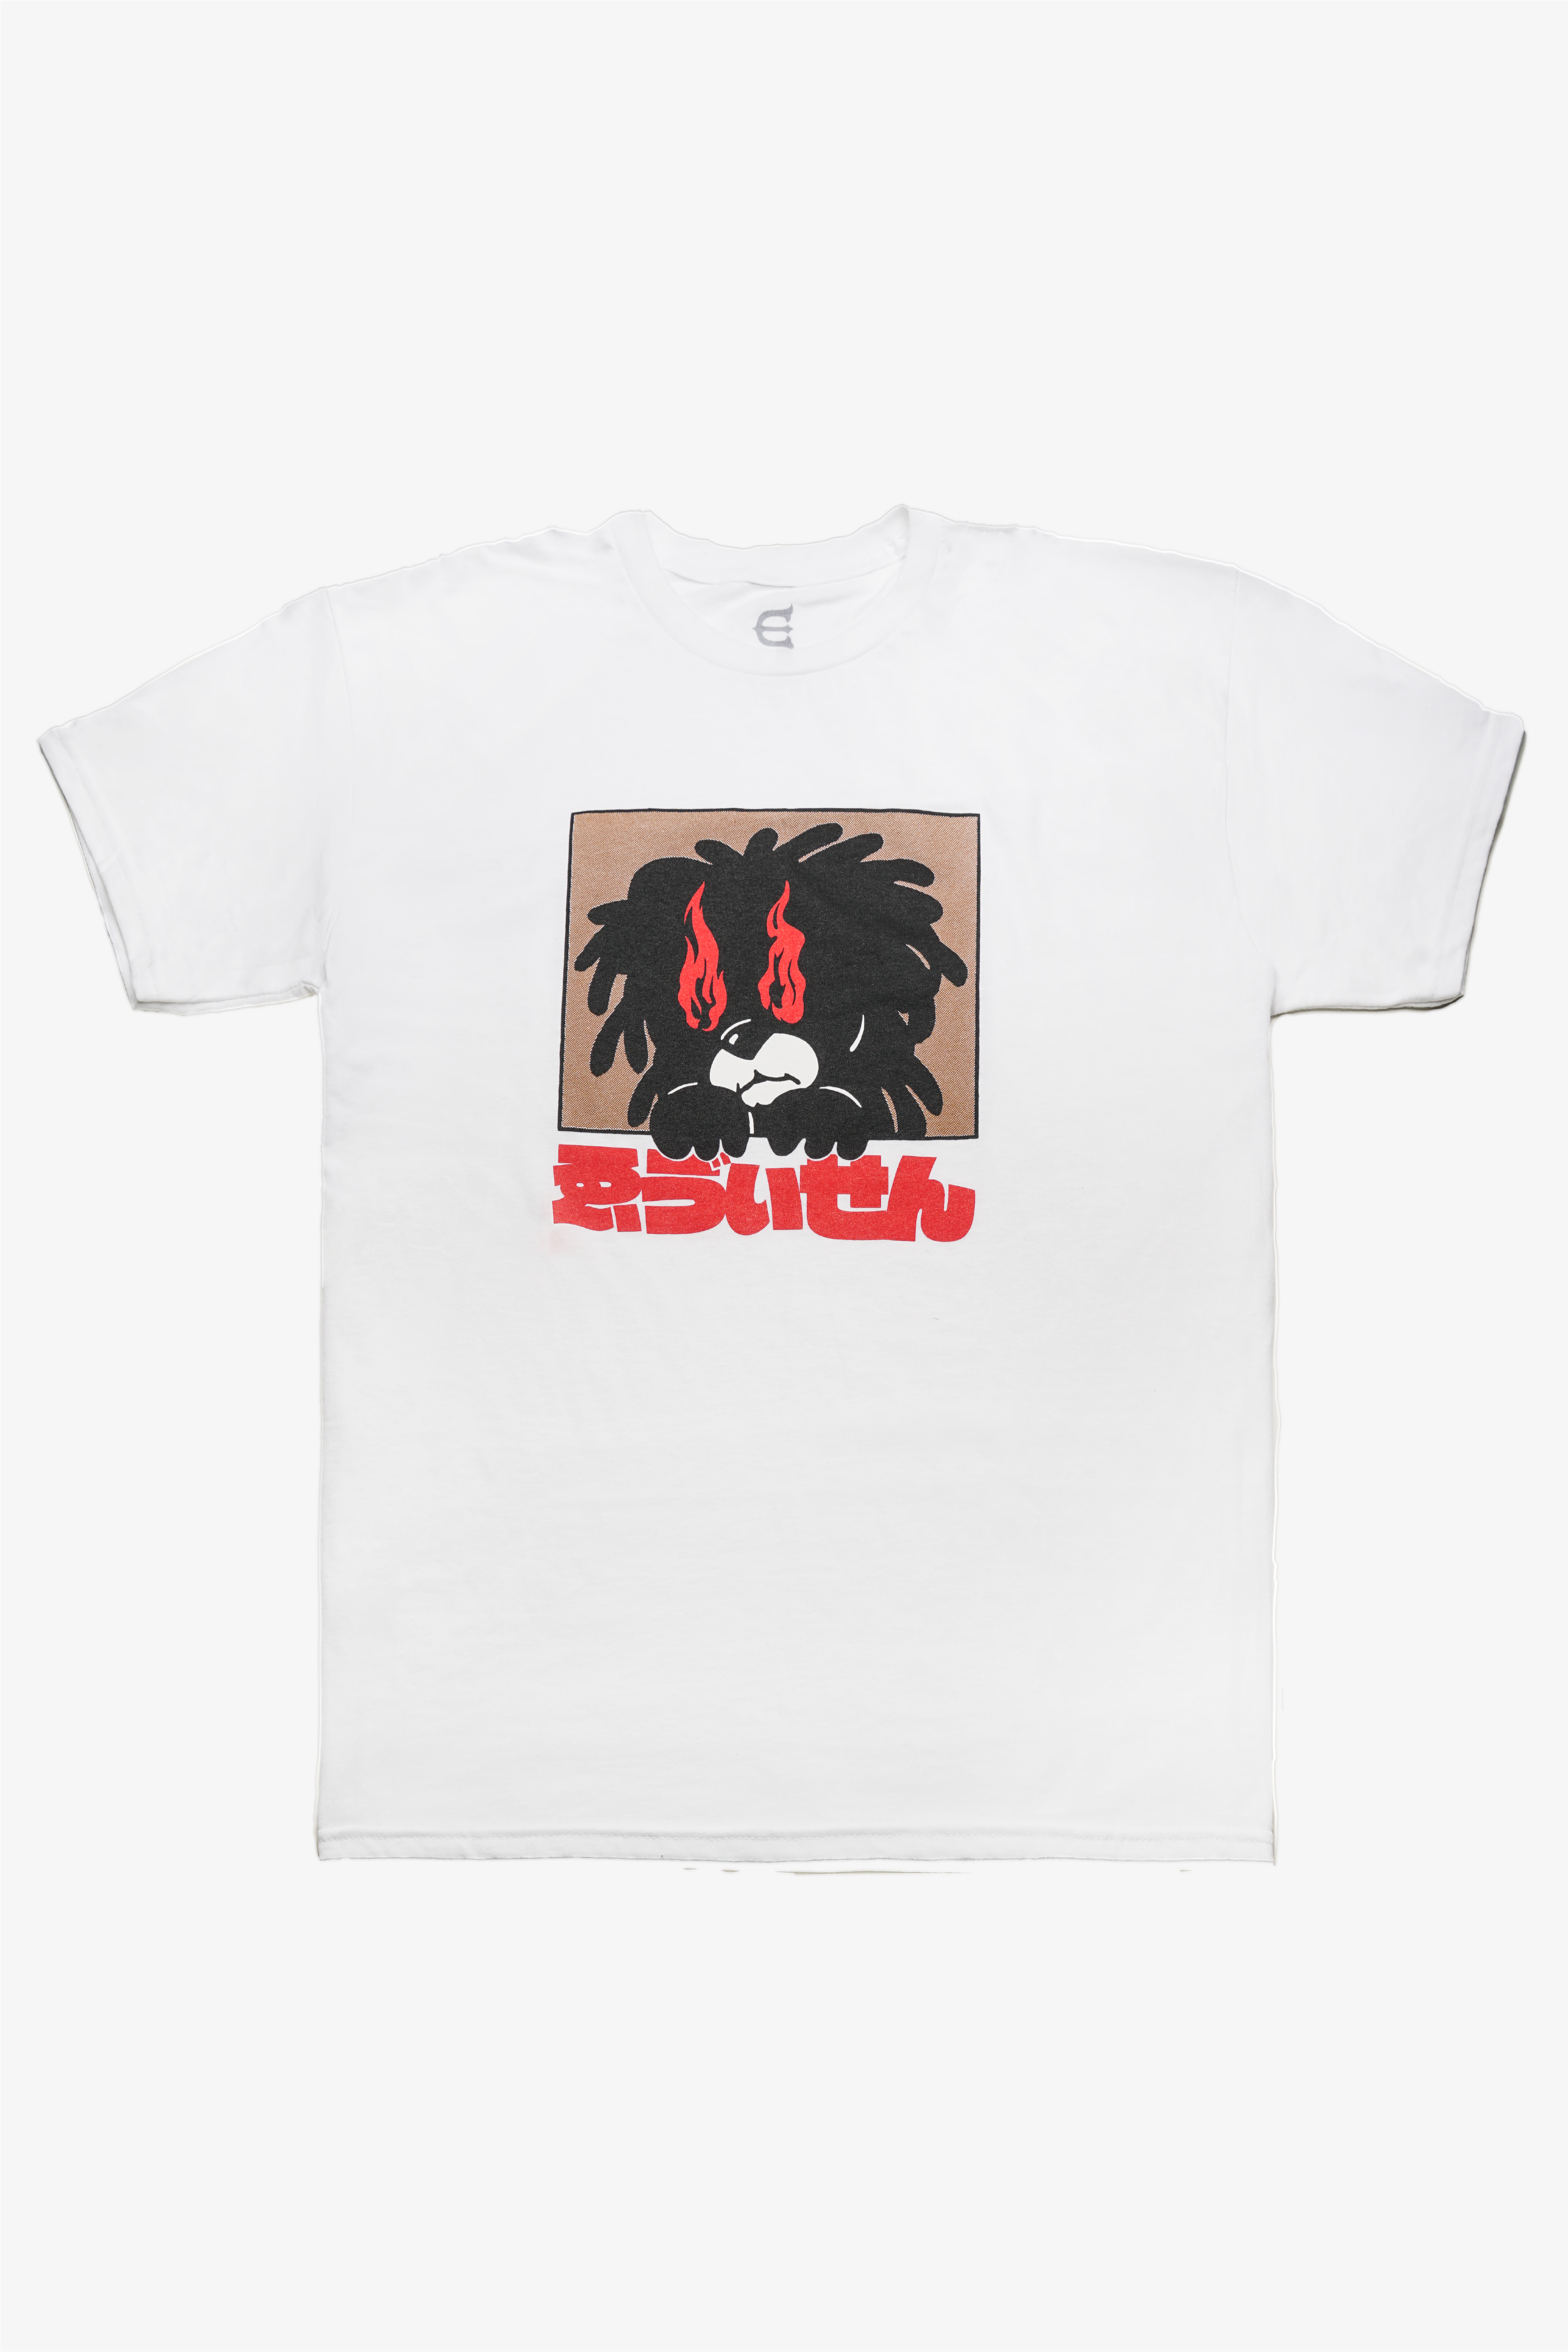 Selectshop FRAME - EVISEN Rasta Fire Tee T-Shirts Dubai